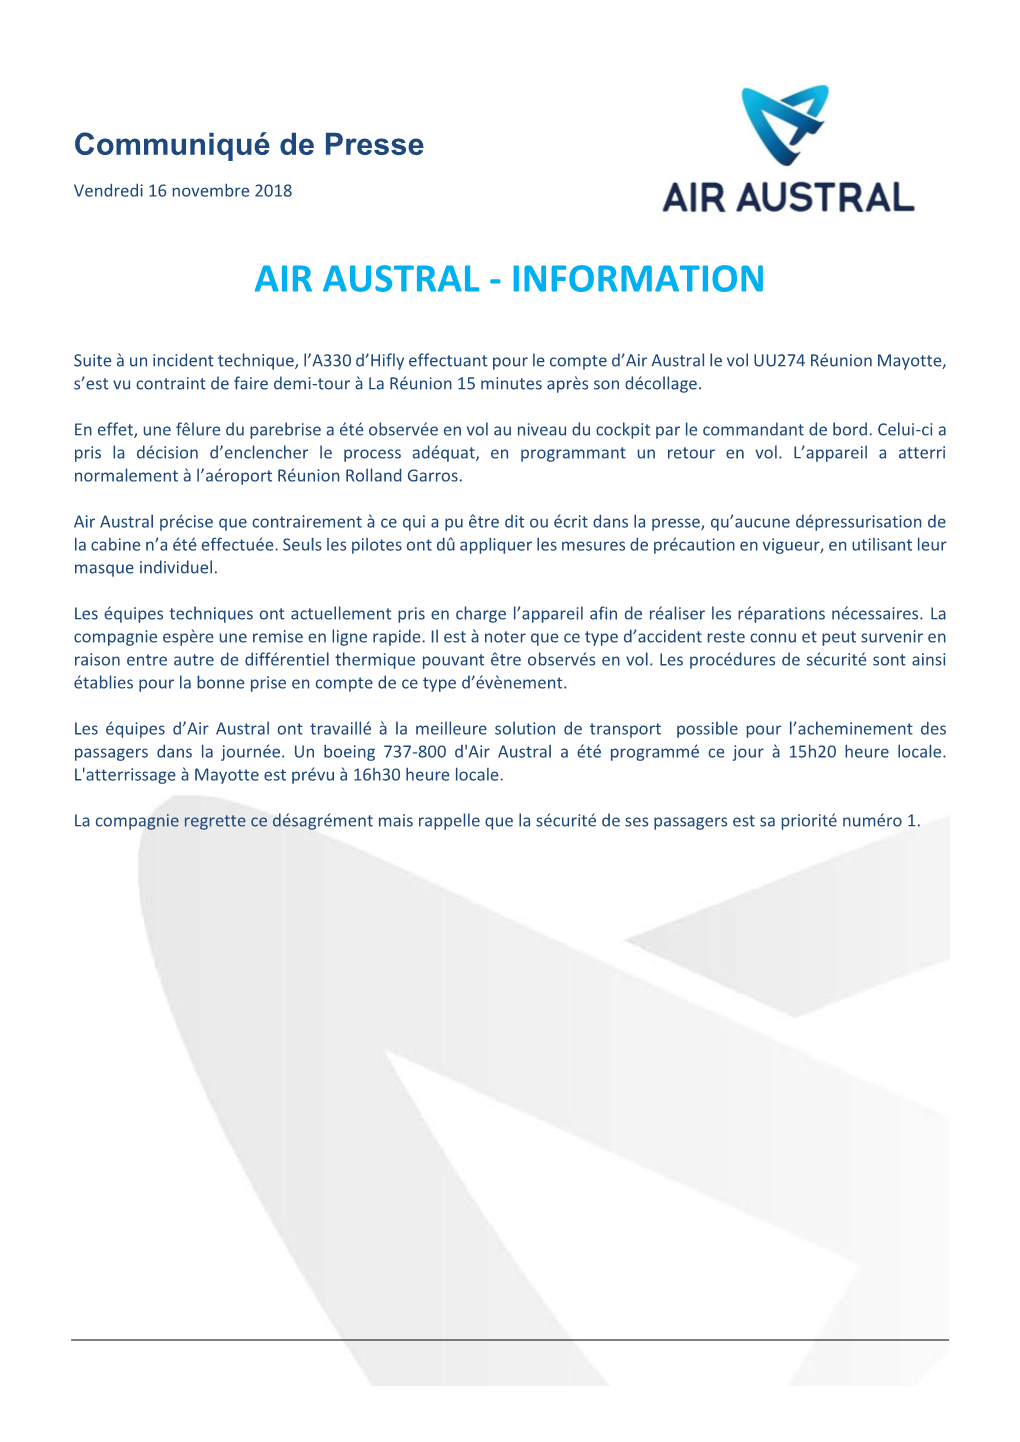 Air Austral - Information